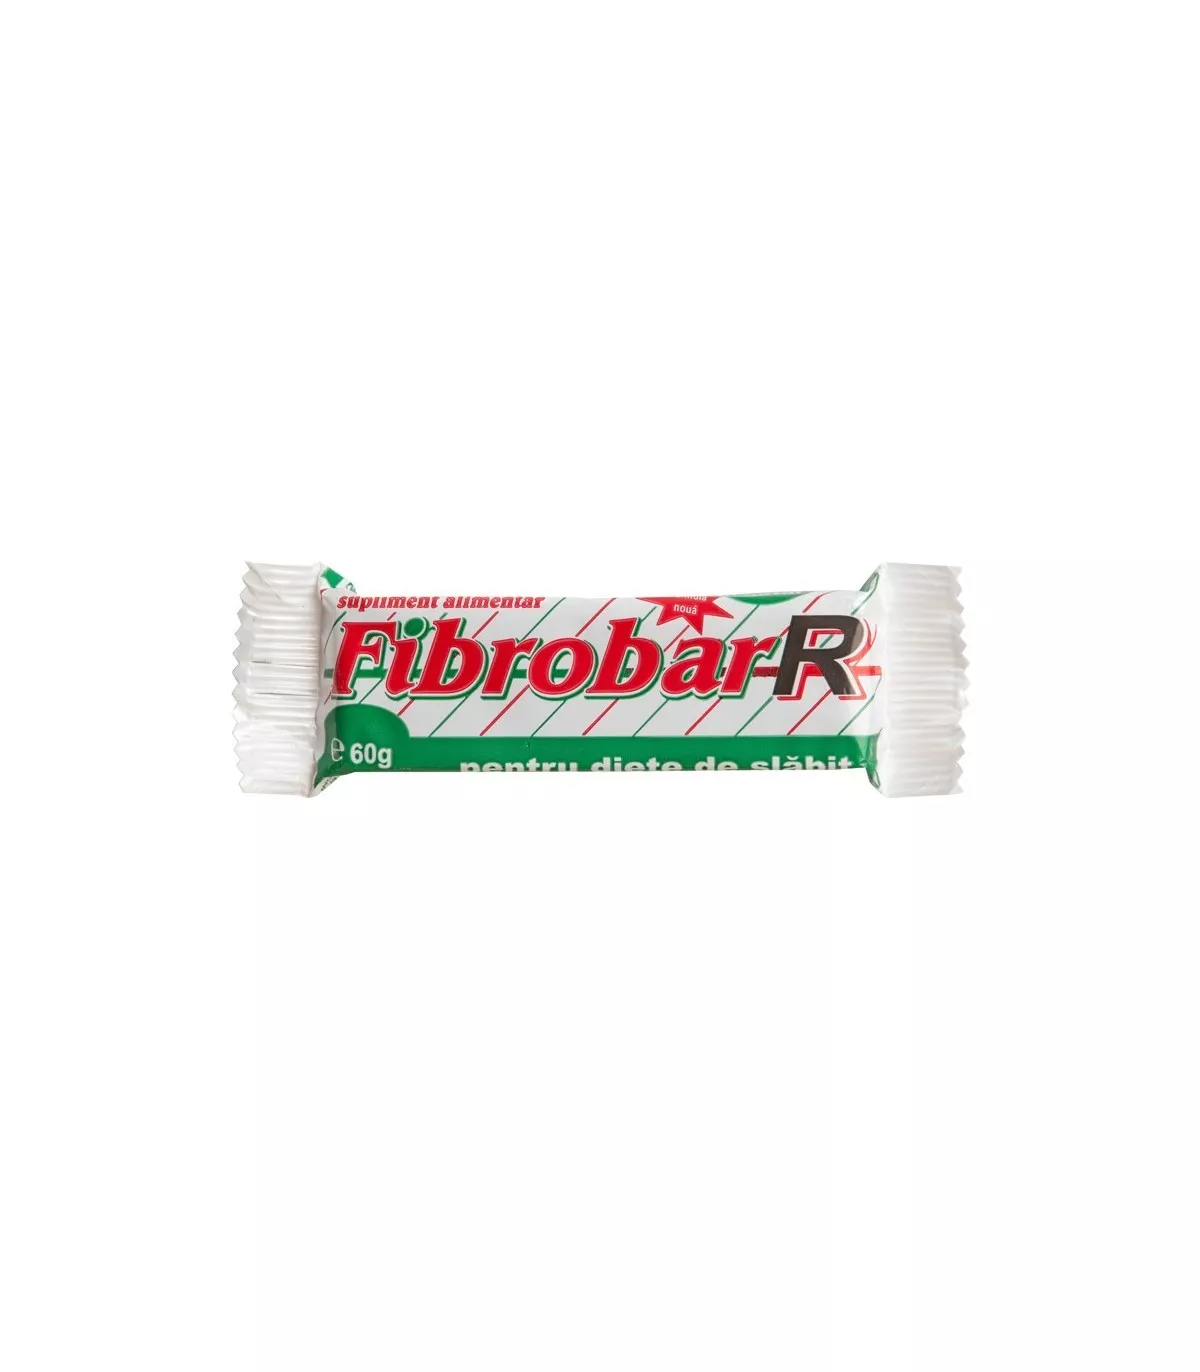 Fibro Bar-R baton pentru slabit 60g (Redis), [],epastila.ro